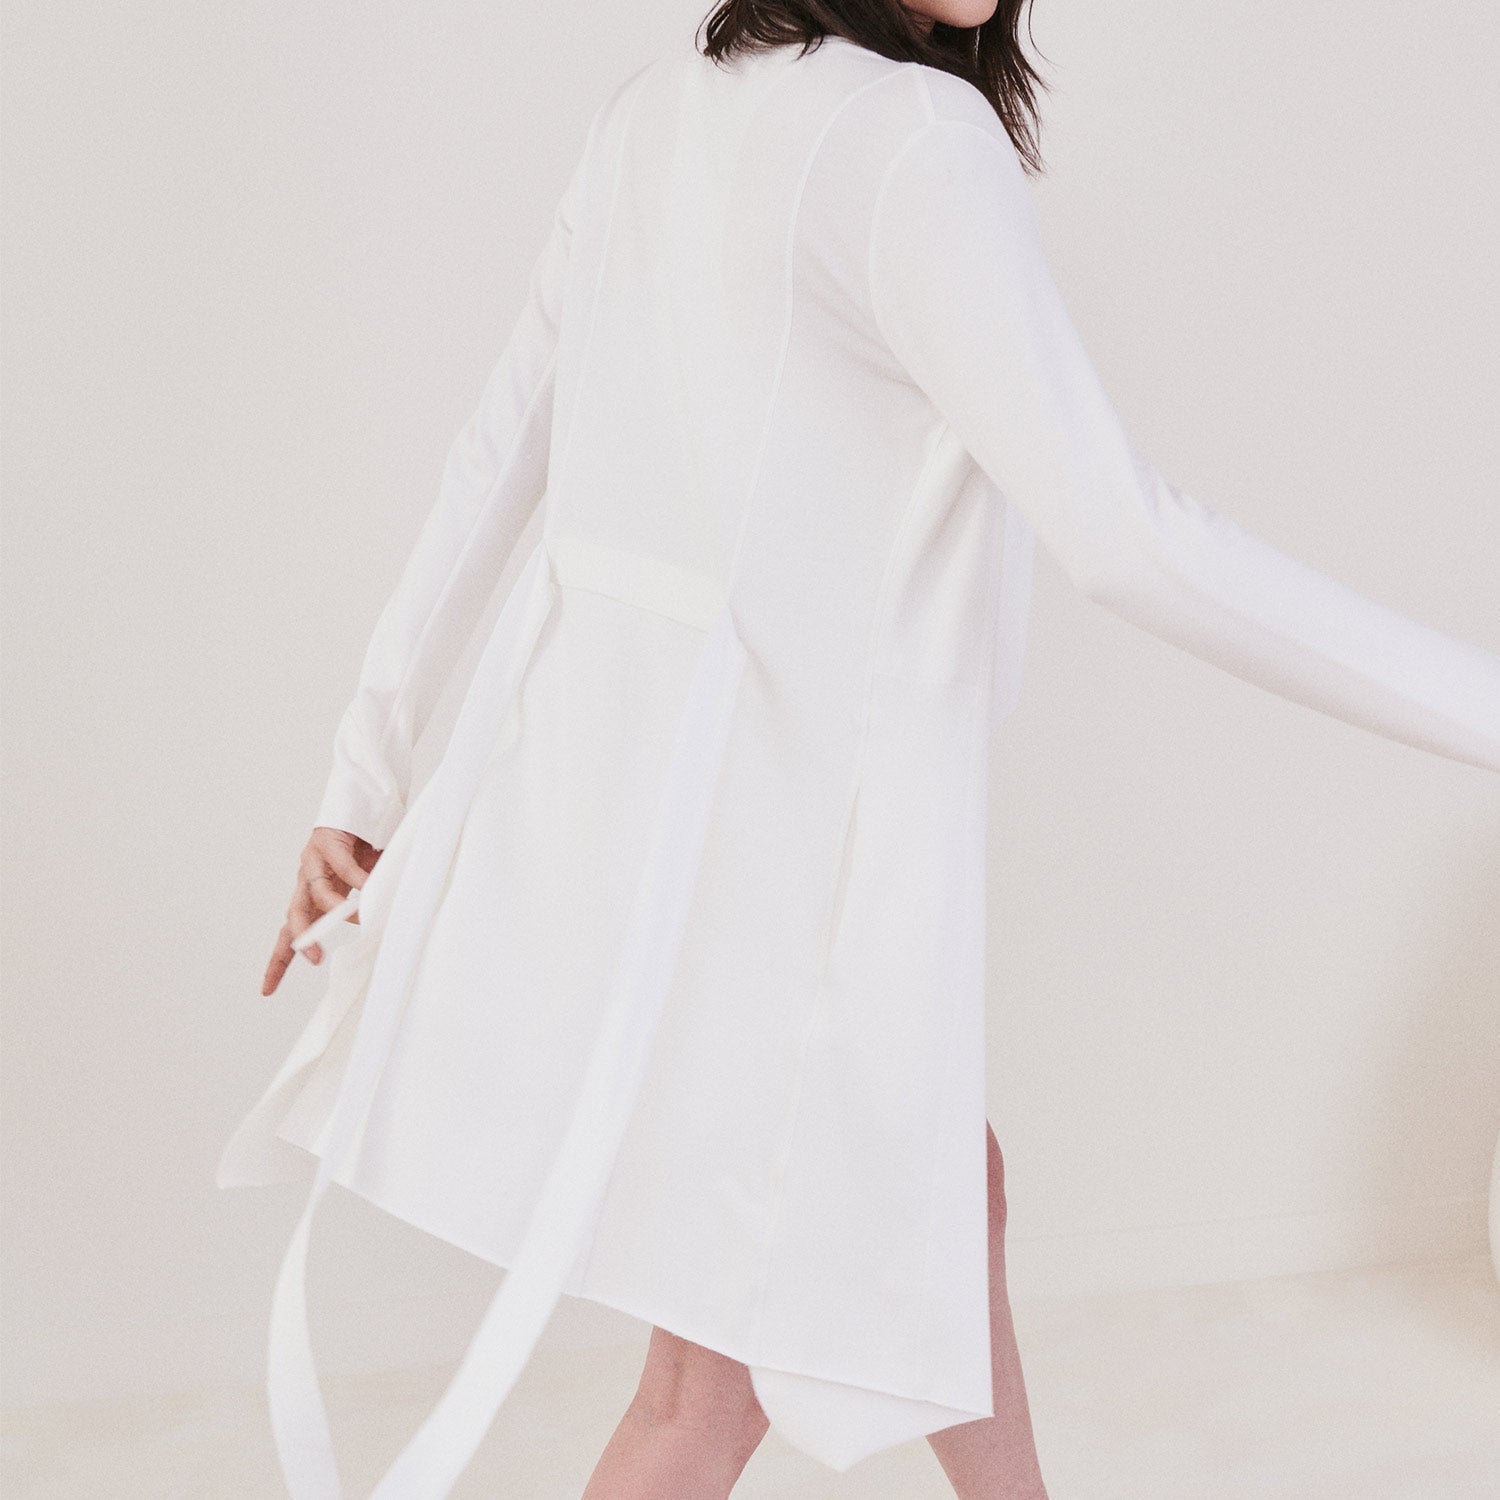 Lunya Sleepwear The Short Robe - #Sincere White